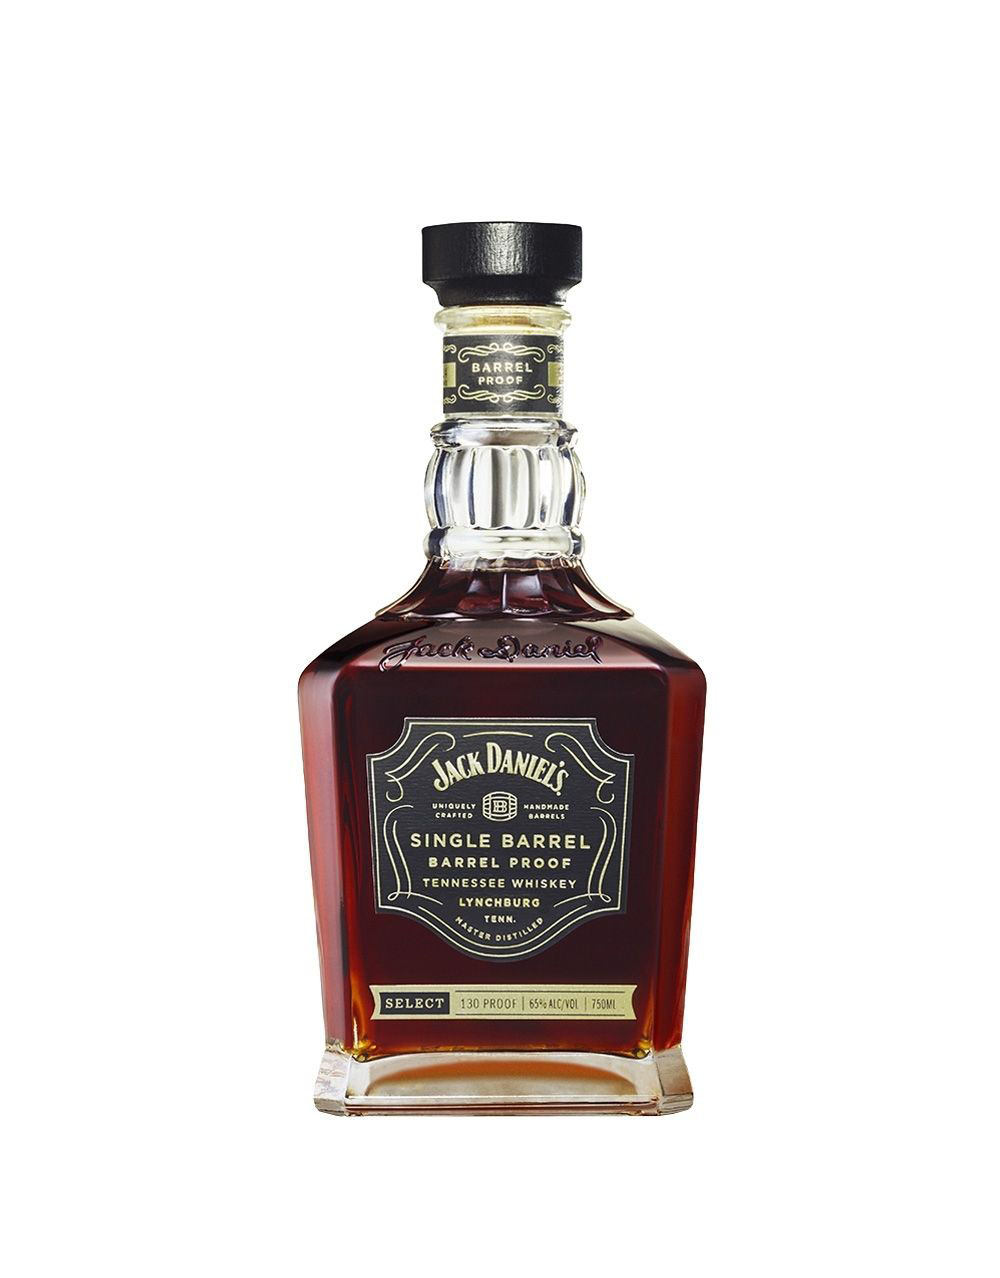 John L. Sullivan Bourbon Cask Finish Irish Whiskey